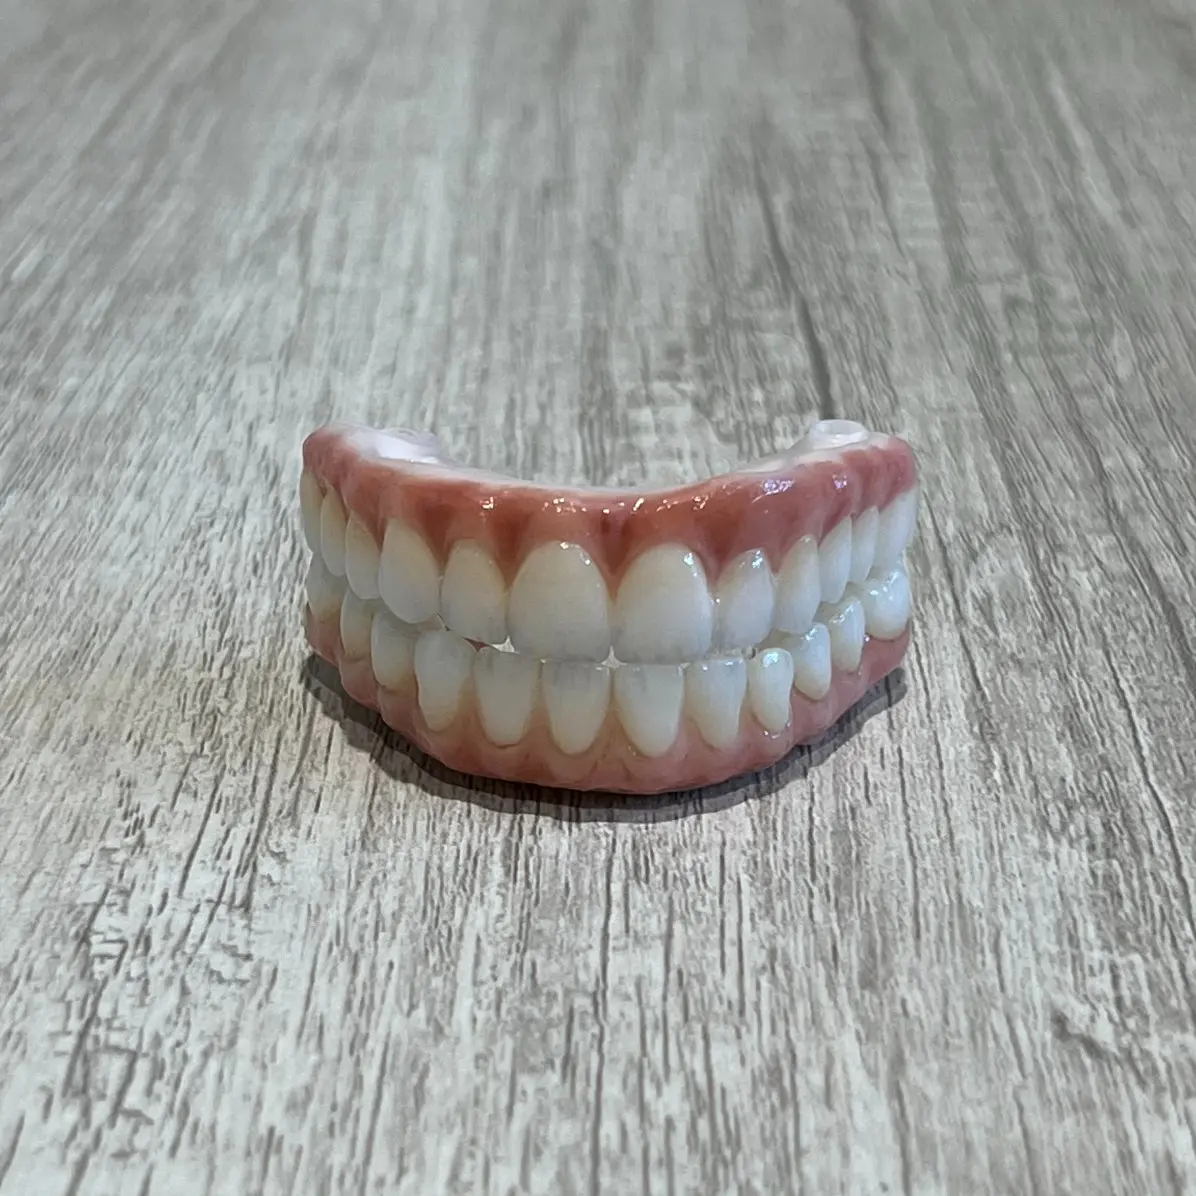 all-on-4 dental implants | dental implants orange county